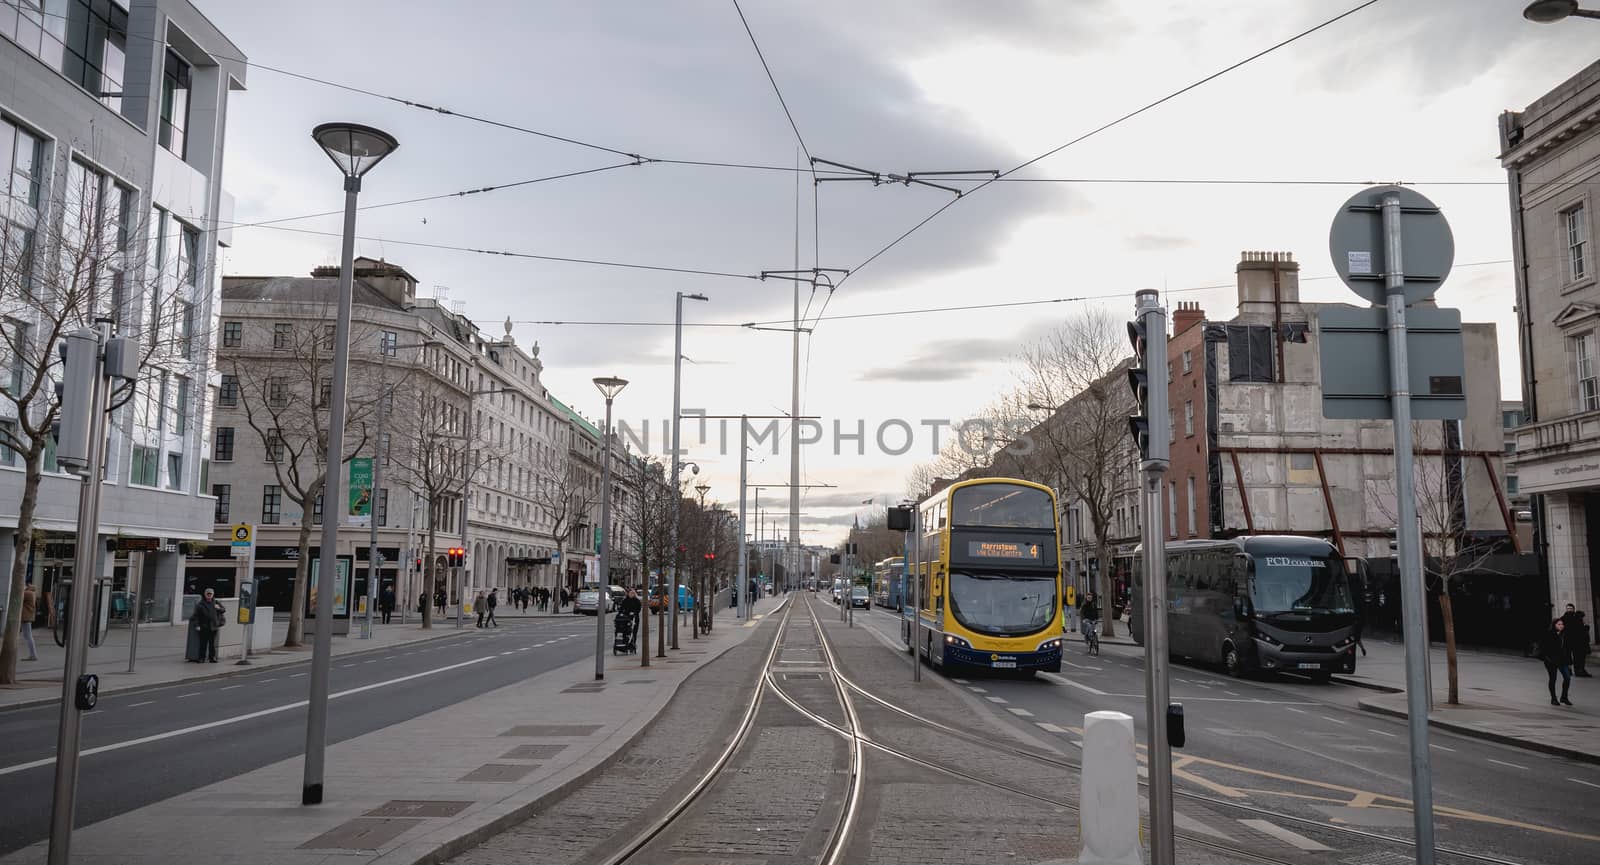 Typical Irish double decker bus running in Dublin by AtlanticEUROSTOXX